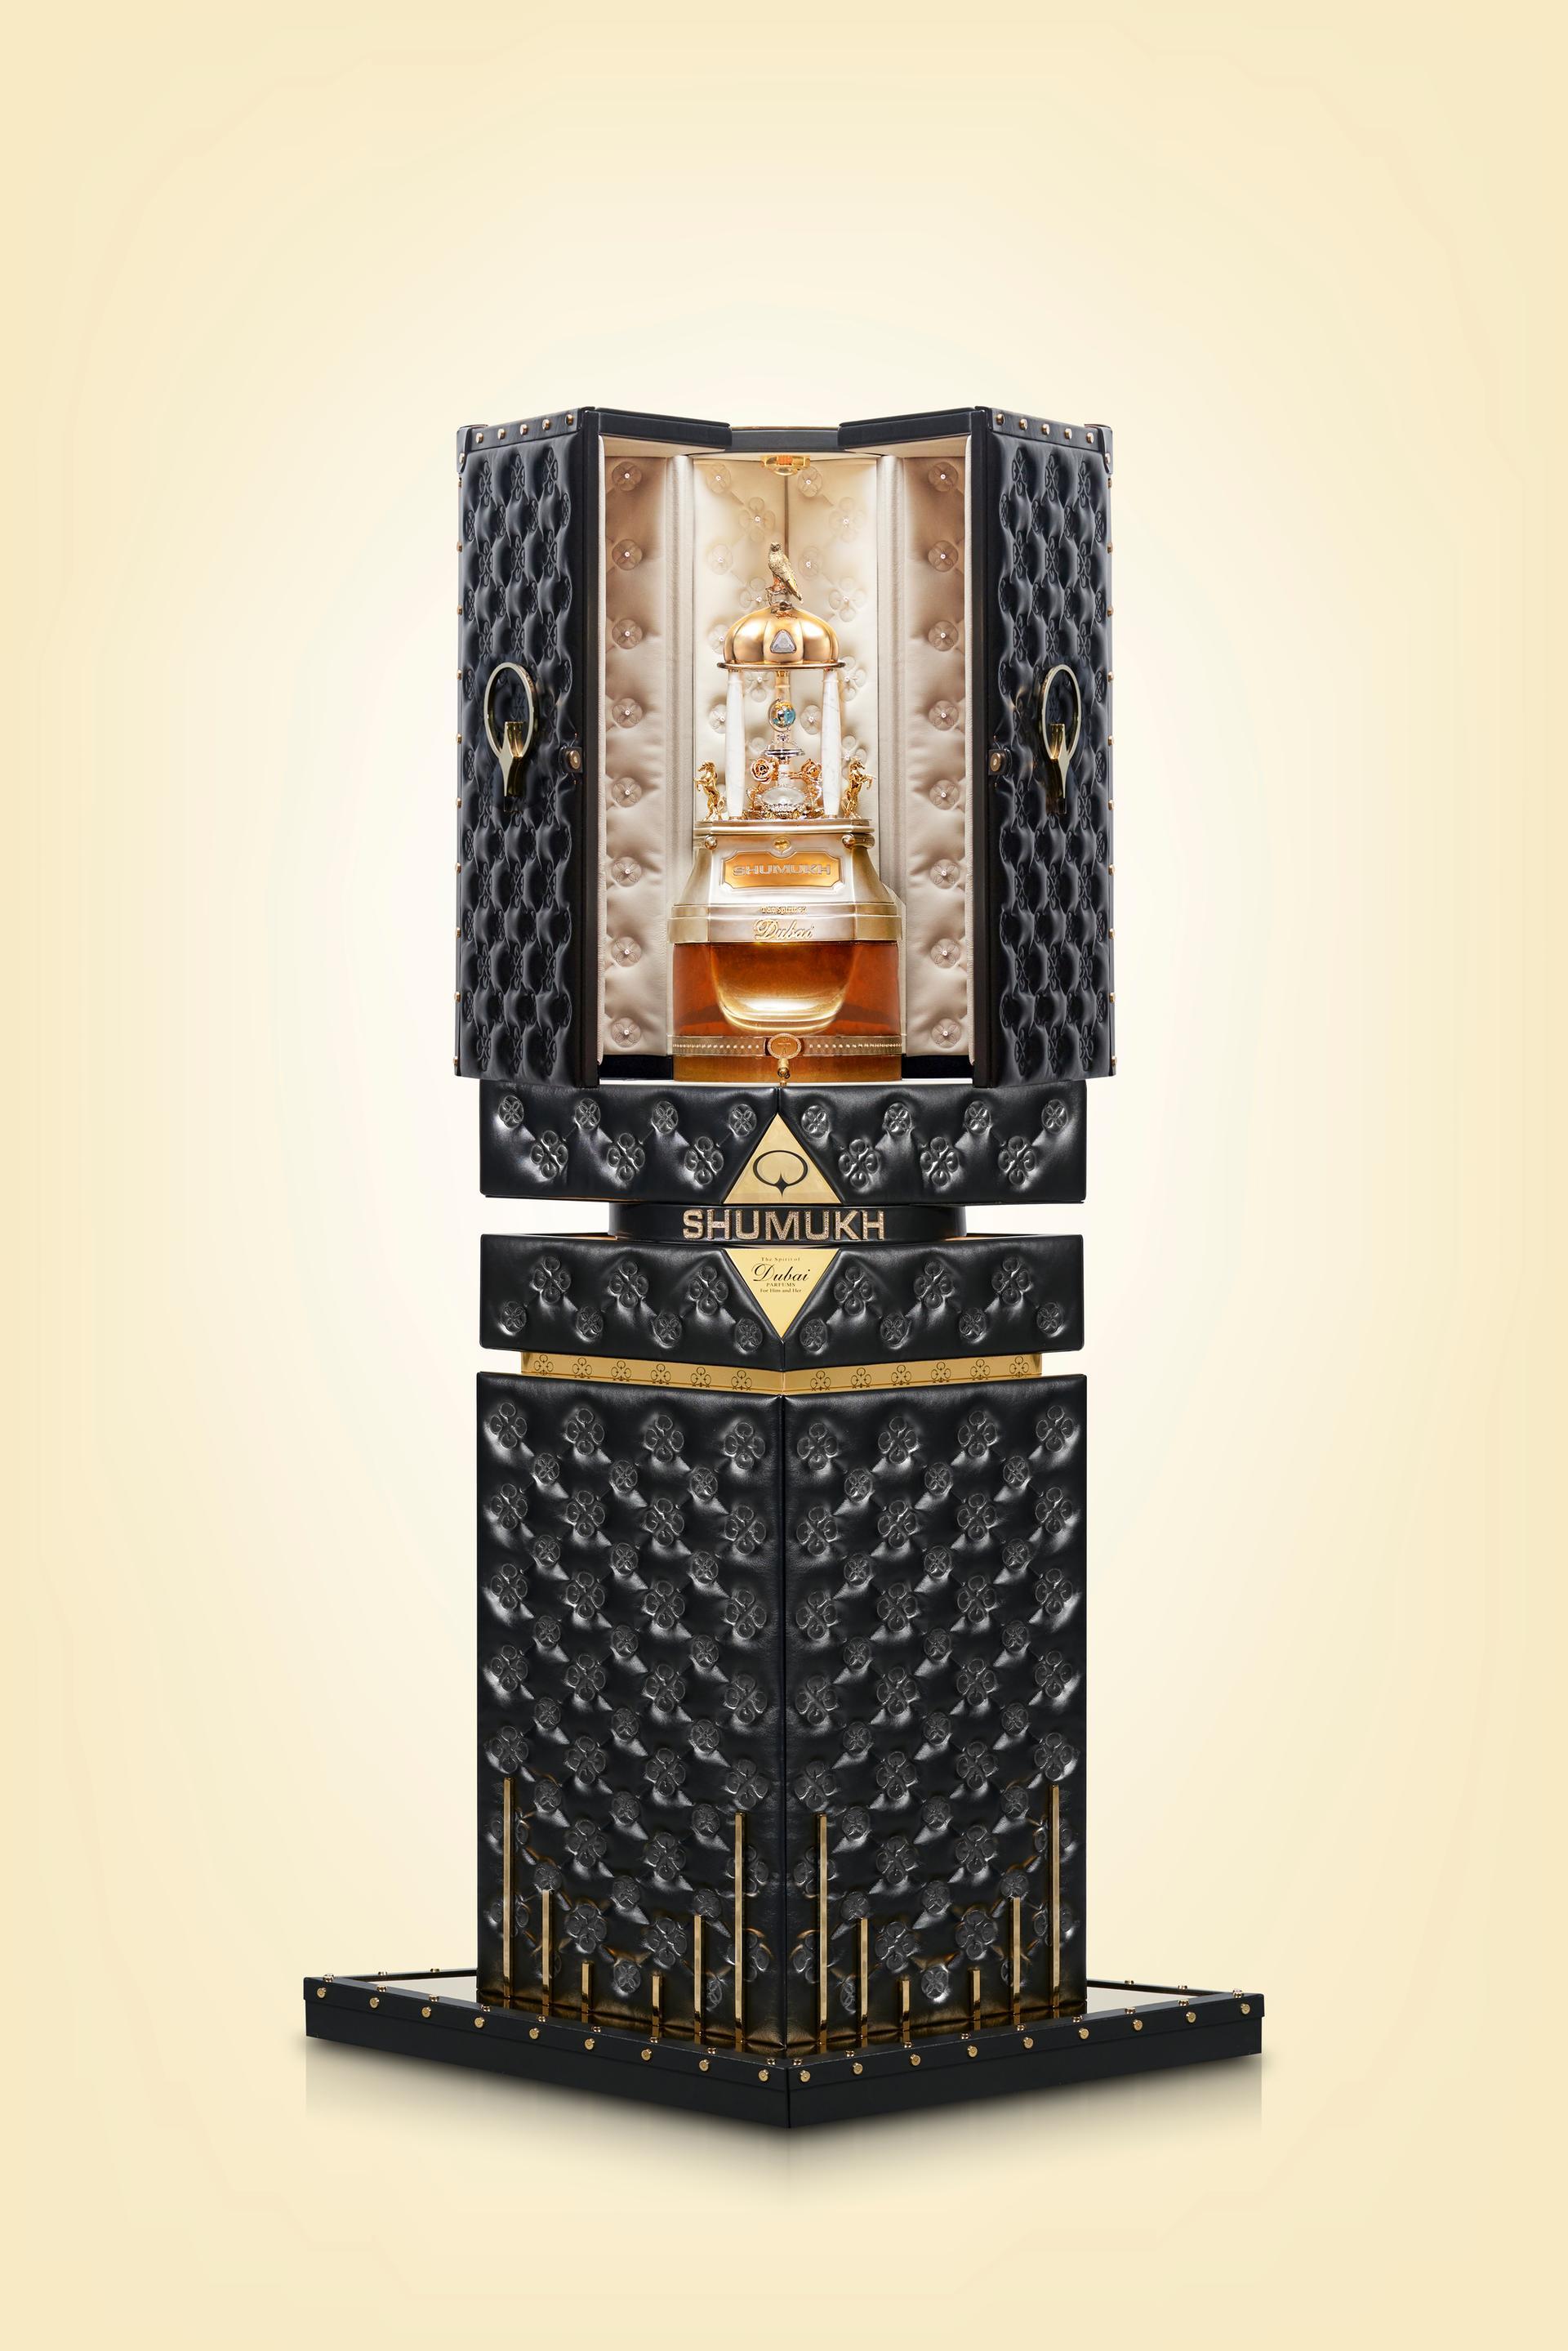 Shumukh, the world's most expensive perfume, comes to Dubai